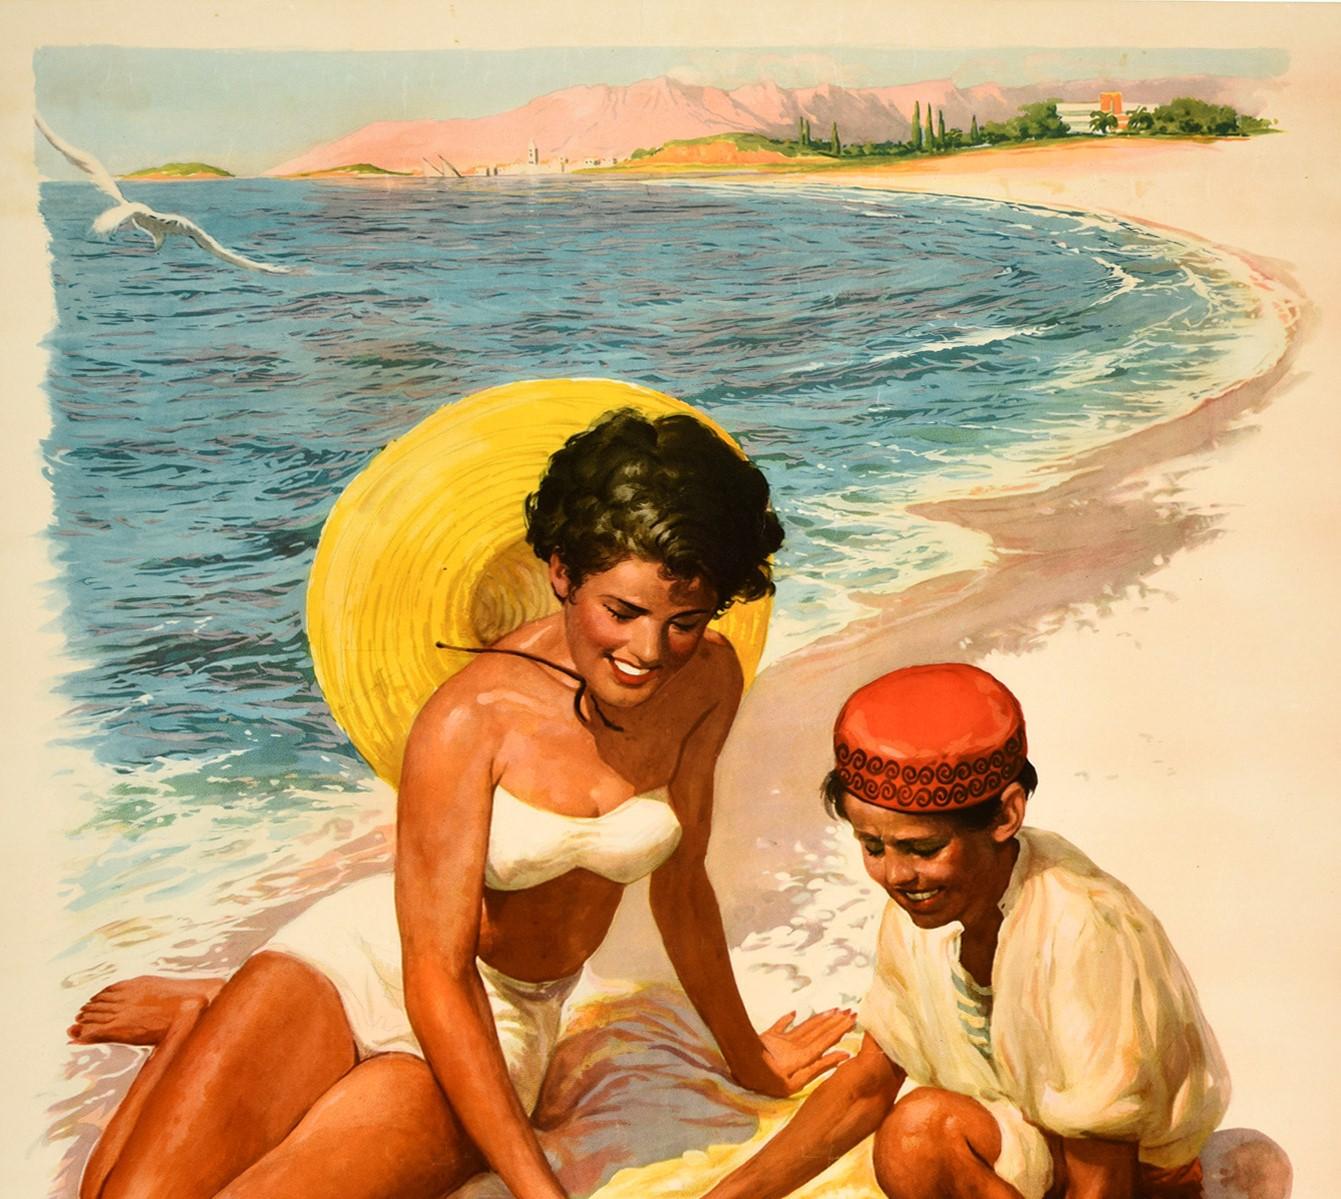 Original Vintage Poster Come To Yugoslavia Adriatic Coast Sea Summer Travel Art - Print by Unknown